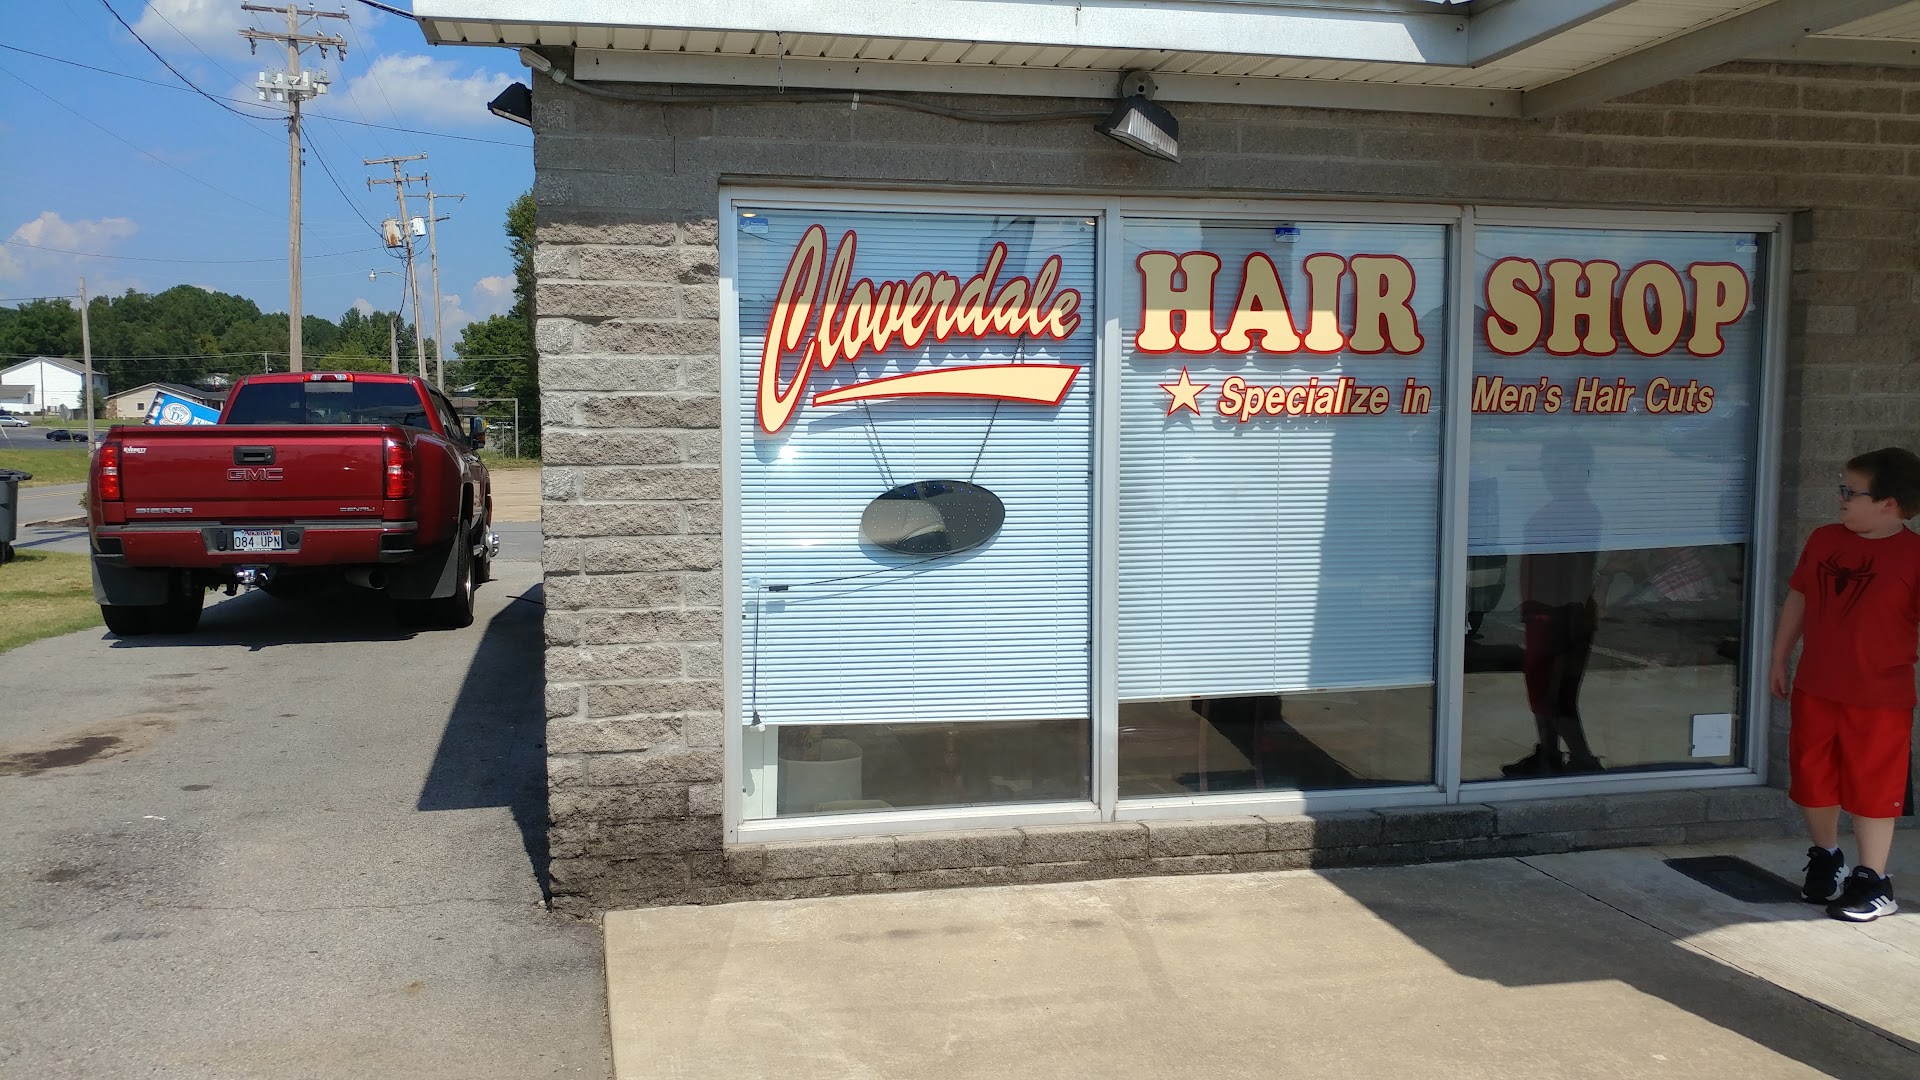 Cloverdale Hair Shop